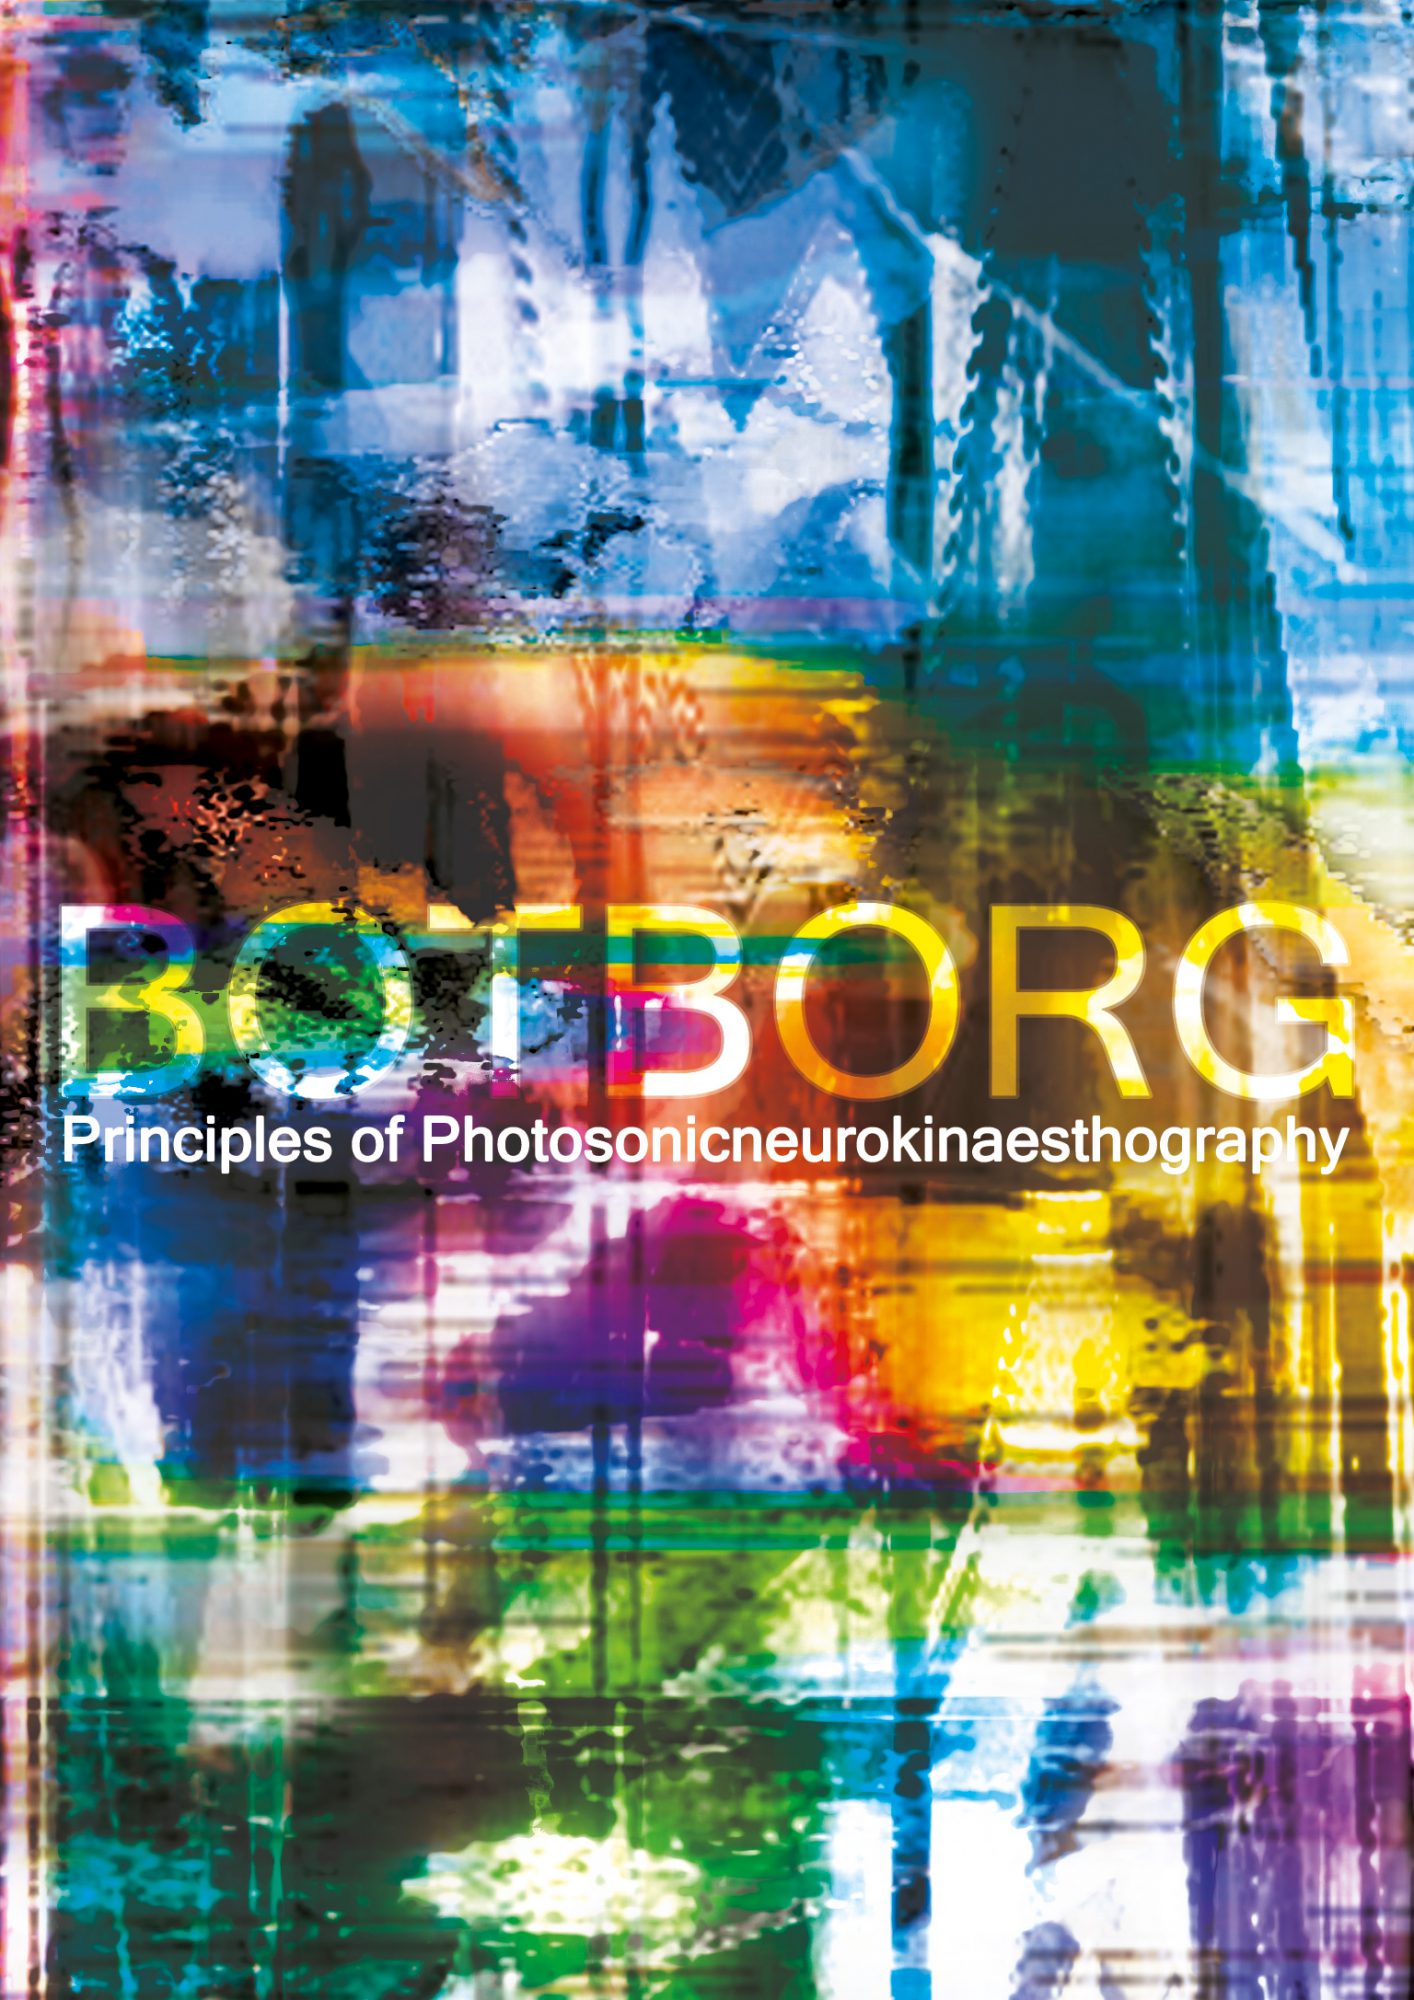 Botborg – Principles of Photosonicneurokinaesthography – 2005